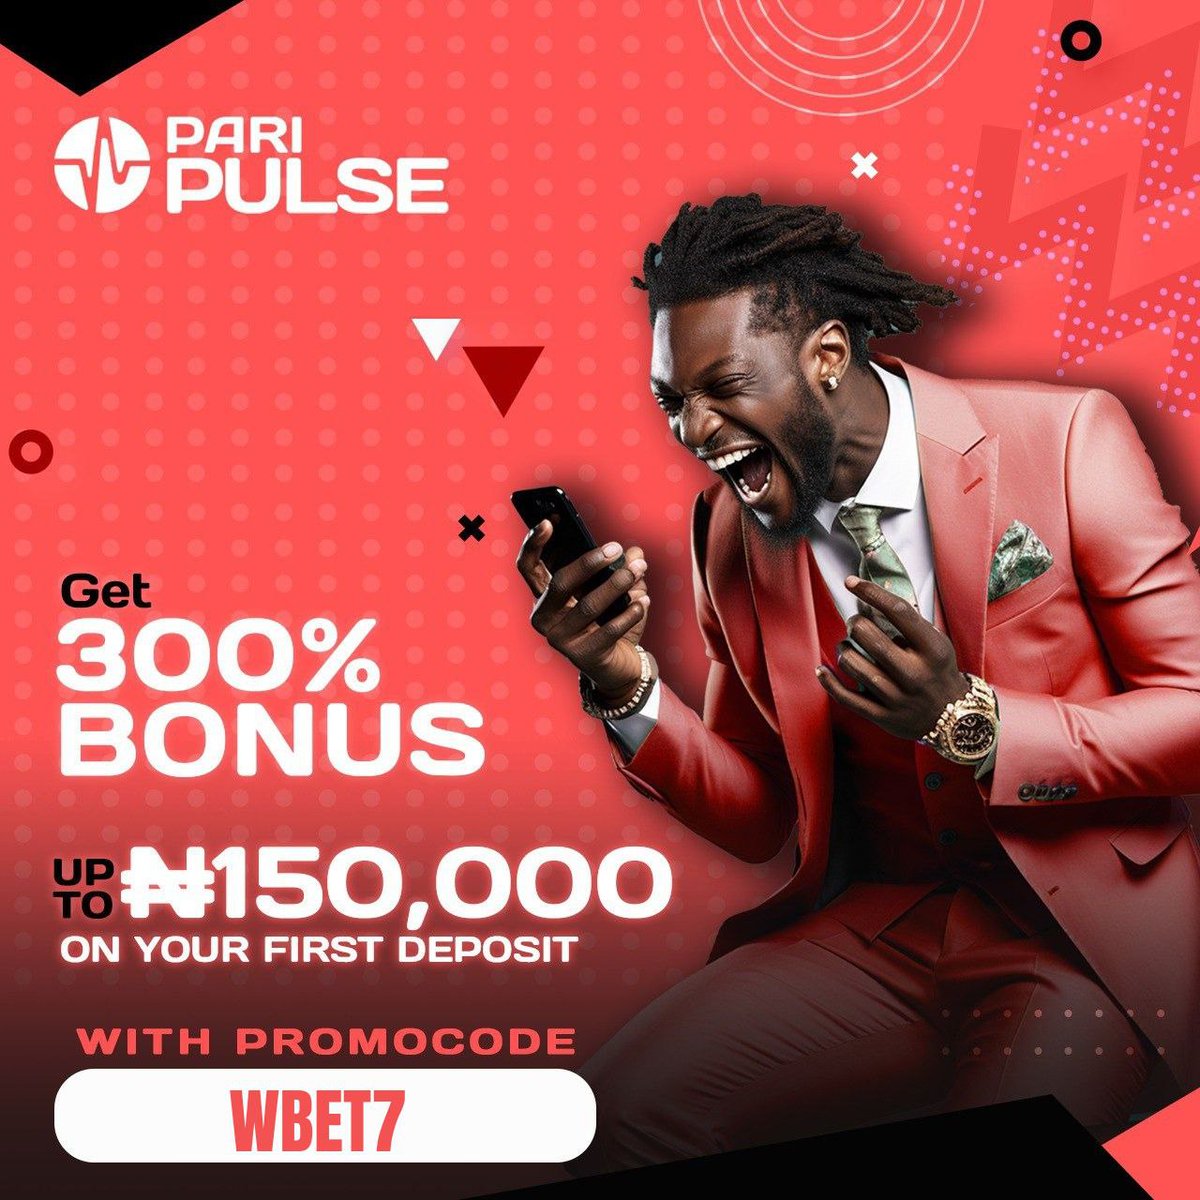 41 odds 8BJPV NO PARIPULSE ACCOUNT🤔🤔 ➡️Triple your deposit with PariPulse when you register using the link pari-pulse.com/Ewbt PROMOCODE : WBET7 #sportsbettingpicks #gambling